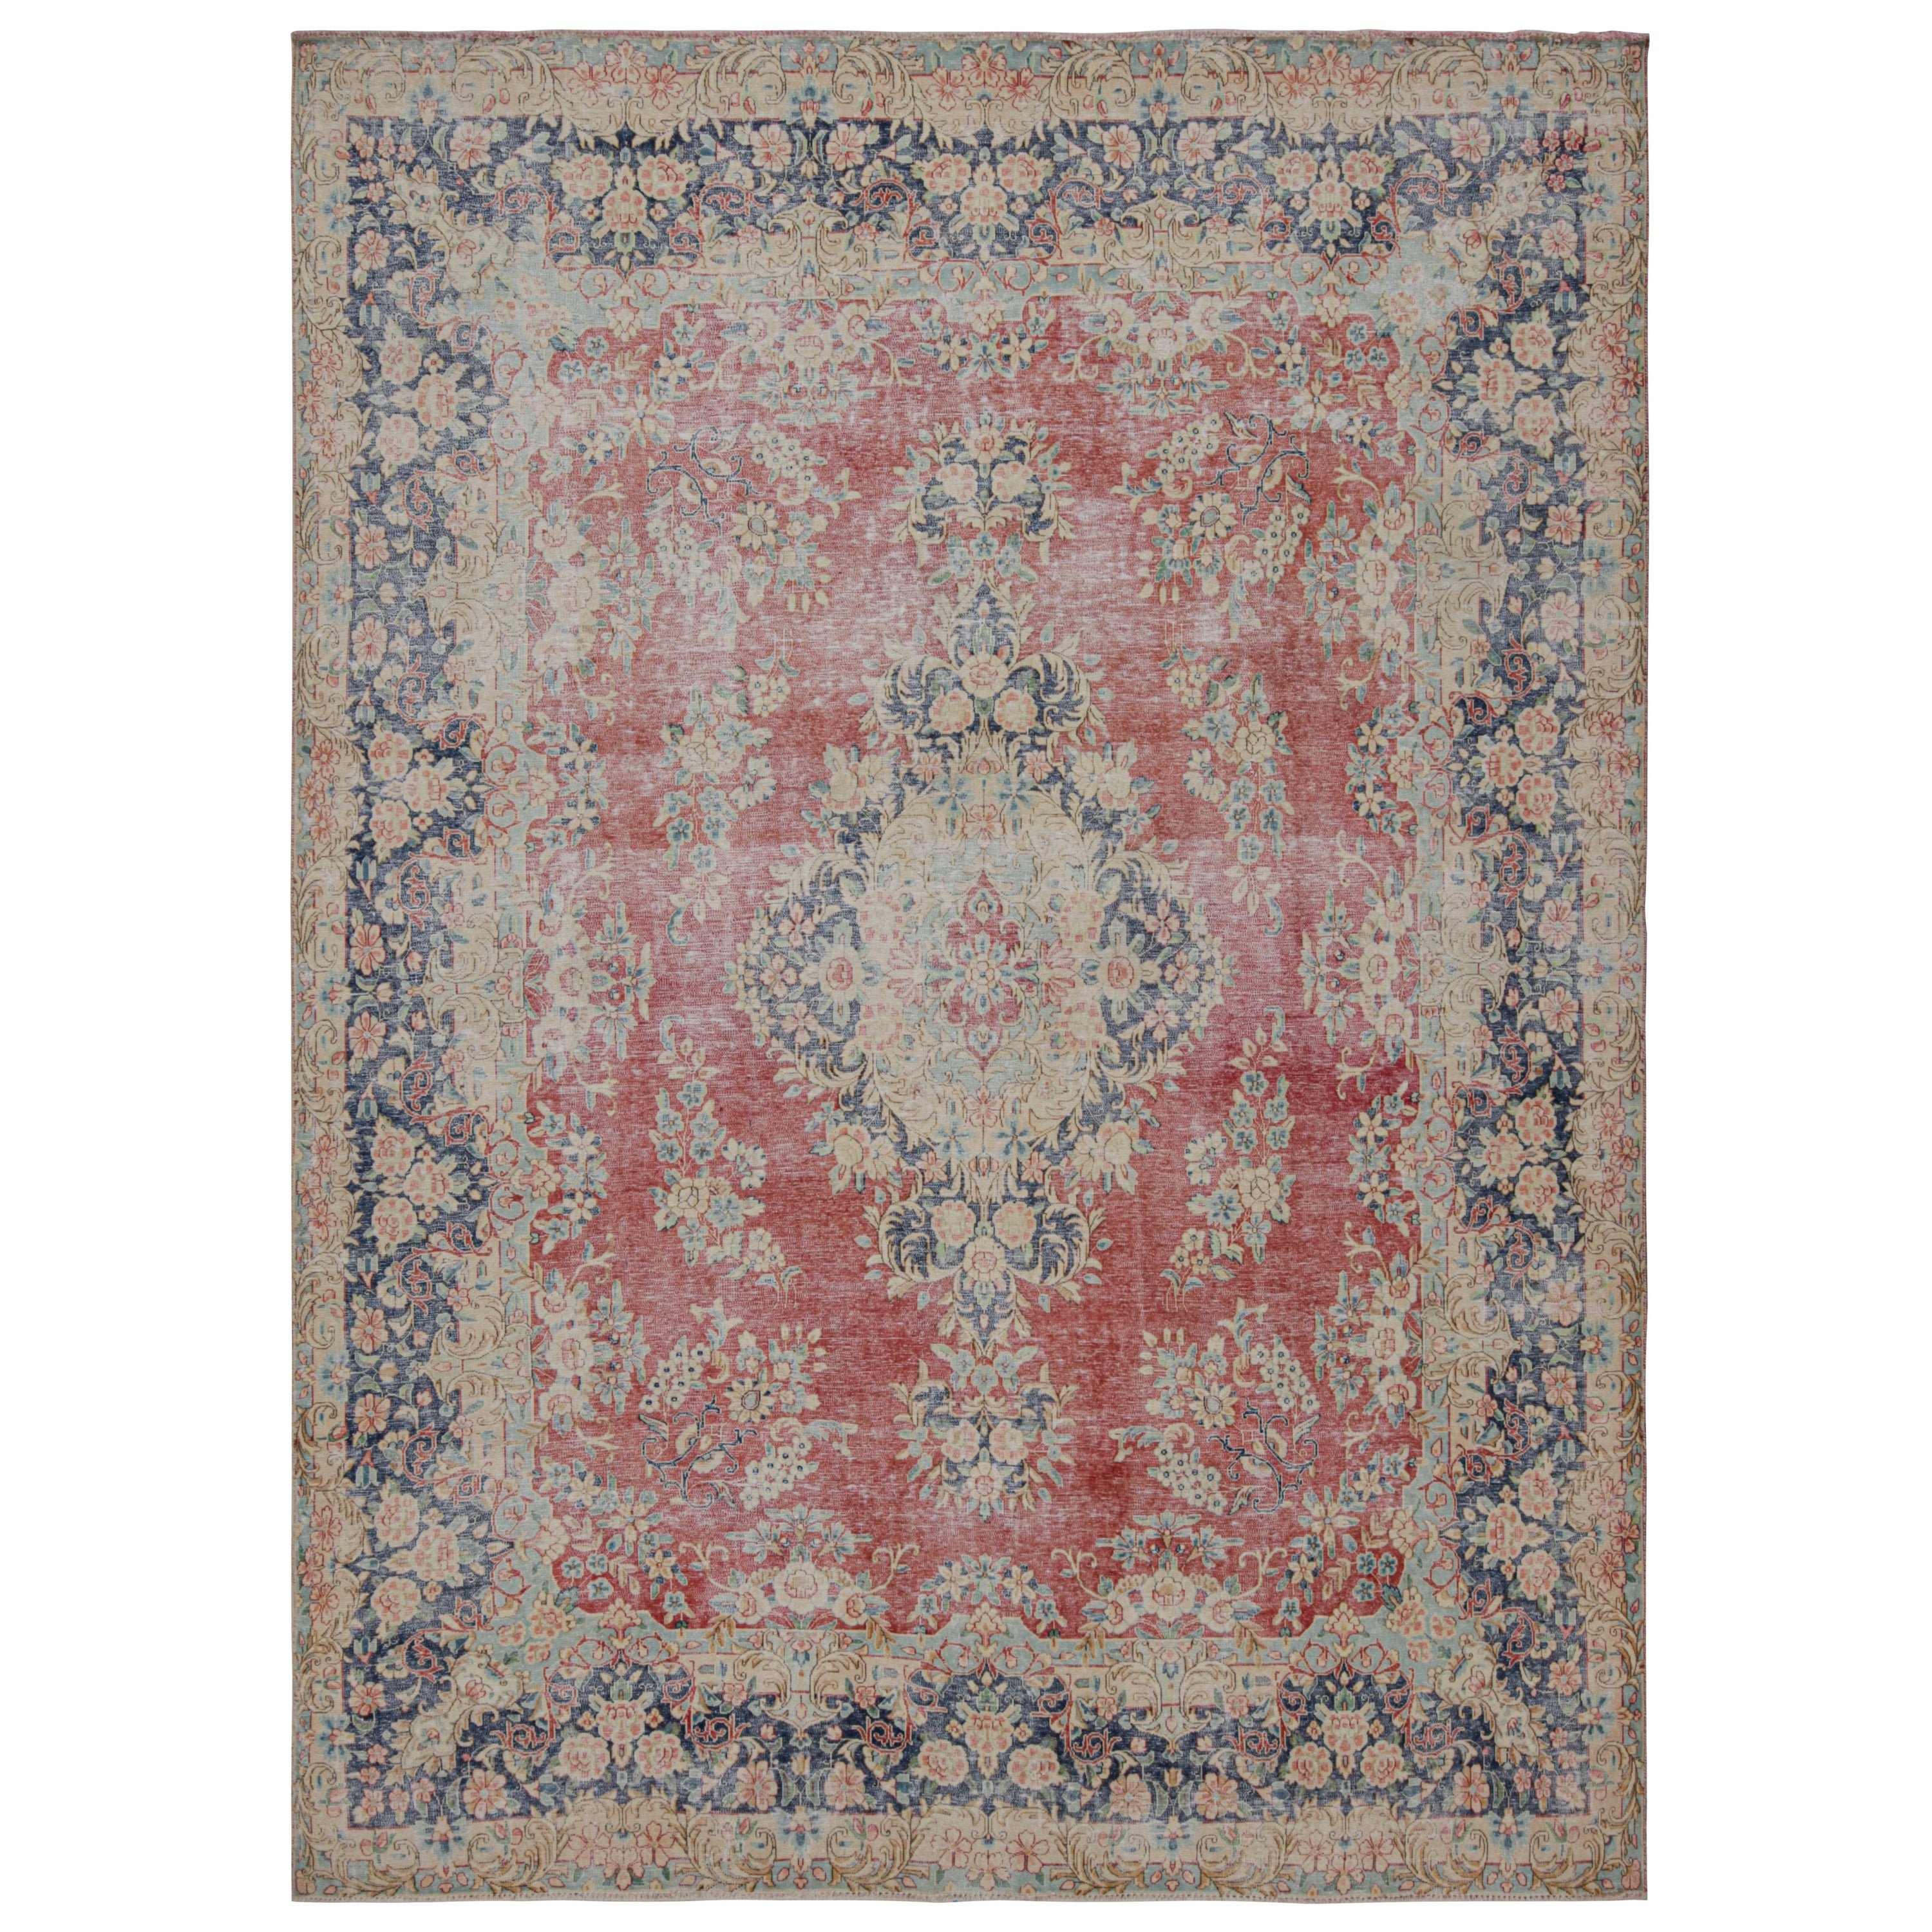 Vintage Persian Kerman rug in Red, Blue and Beige Floral Patterns by Rug & Kilim For Sale